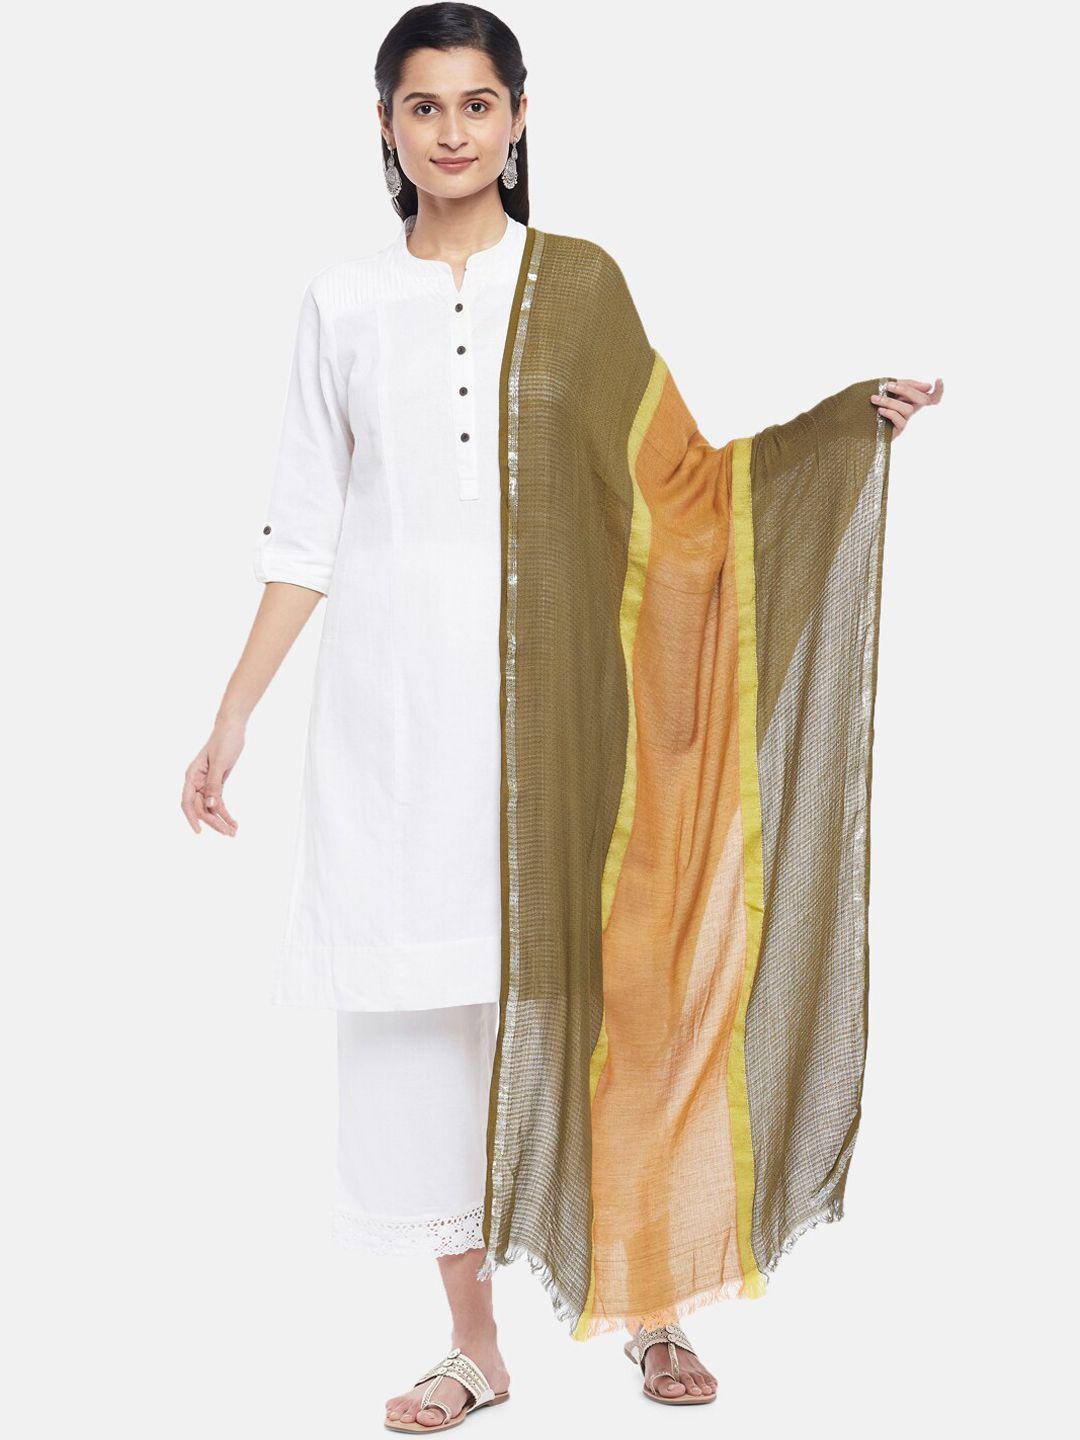 rangmanch by pantaloons women olive green & yellow woven design shawl